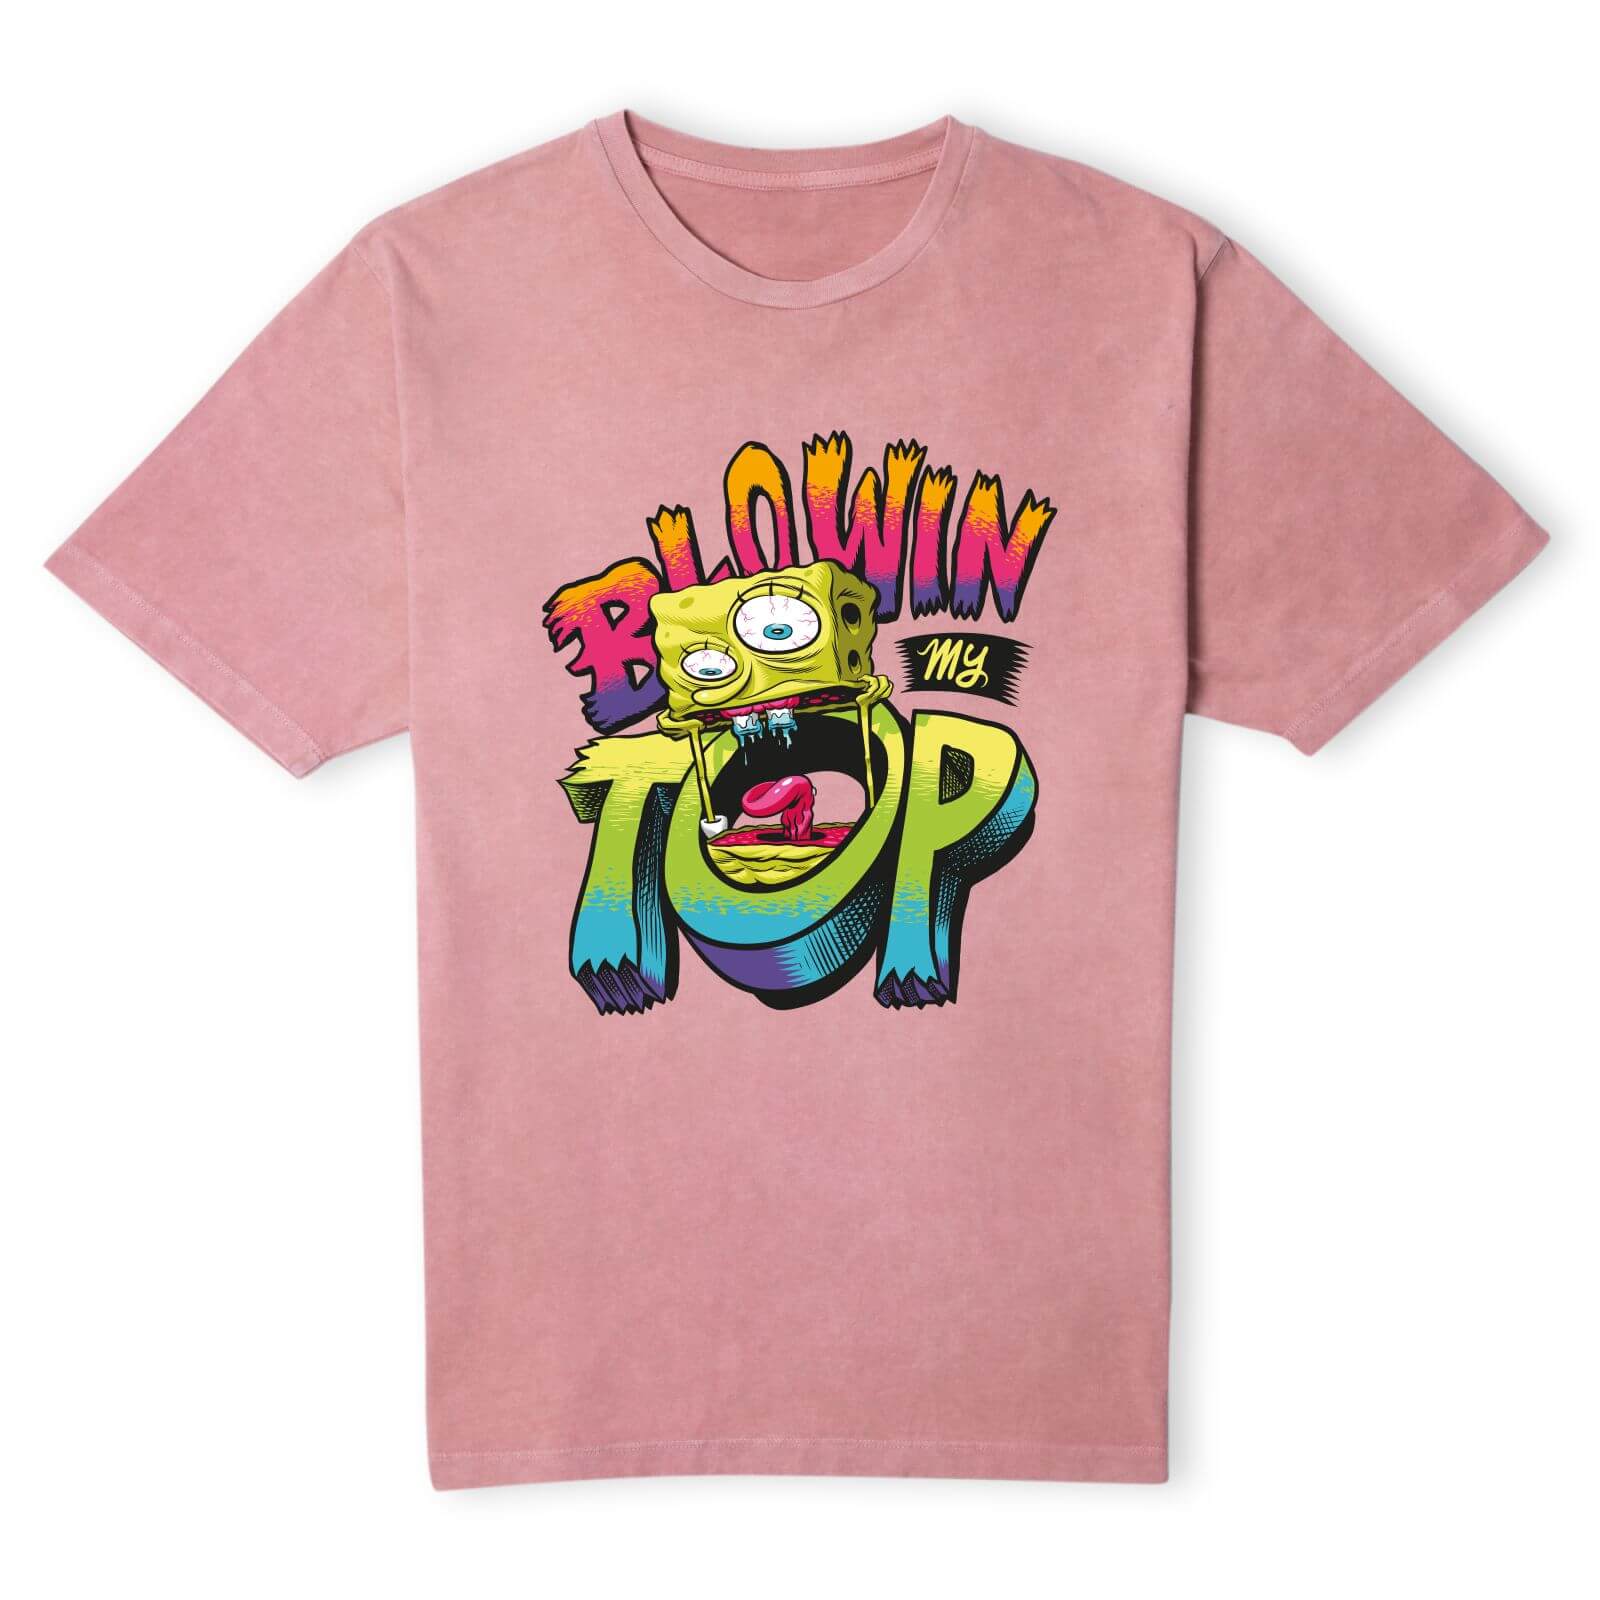 Spongebob Squarepants Blowin My Top Men's T-Shirt - Pink Acid Wash - XS - Pink Acid Wash